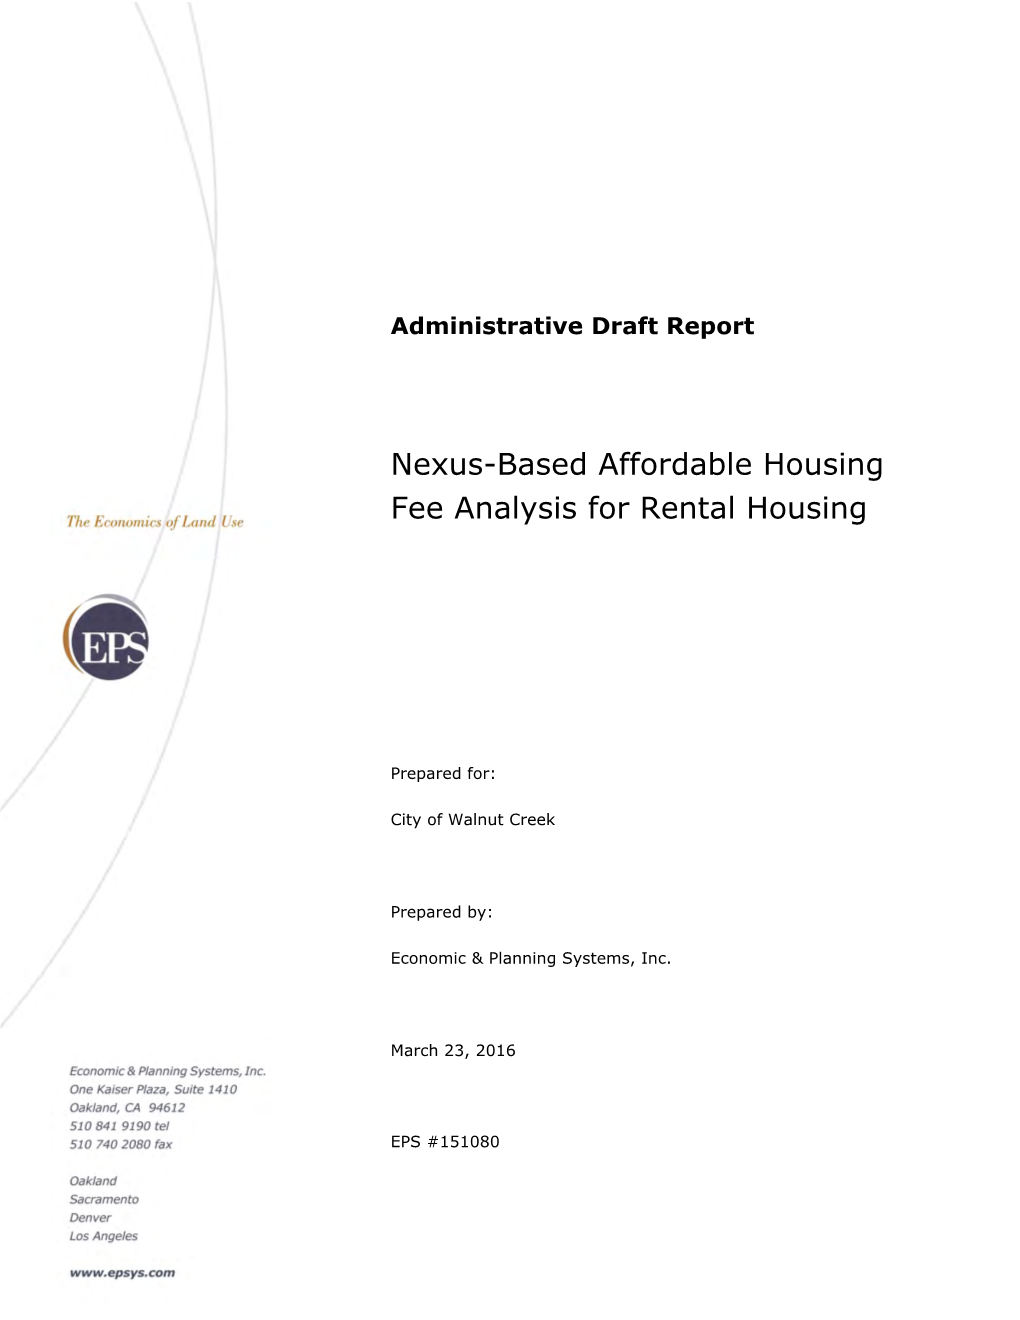 Nexus-Based Affordable Housing Fee Analysis for Rental Housing